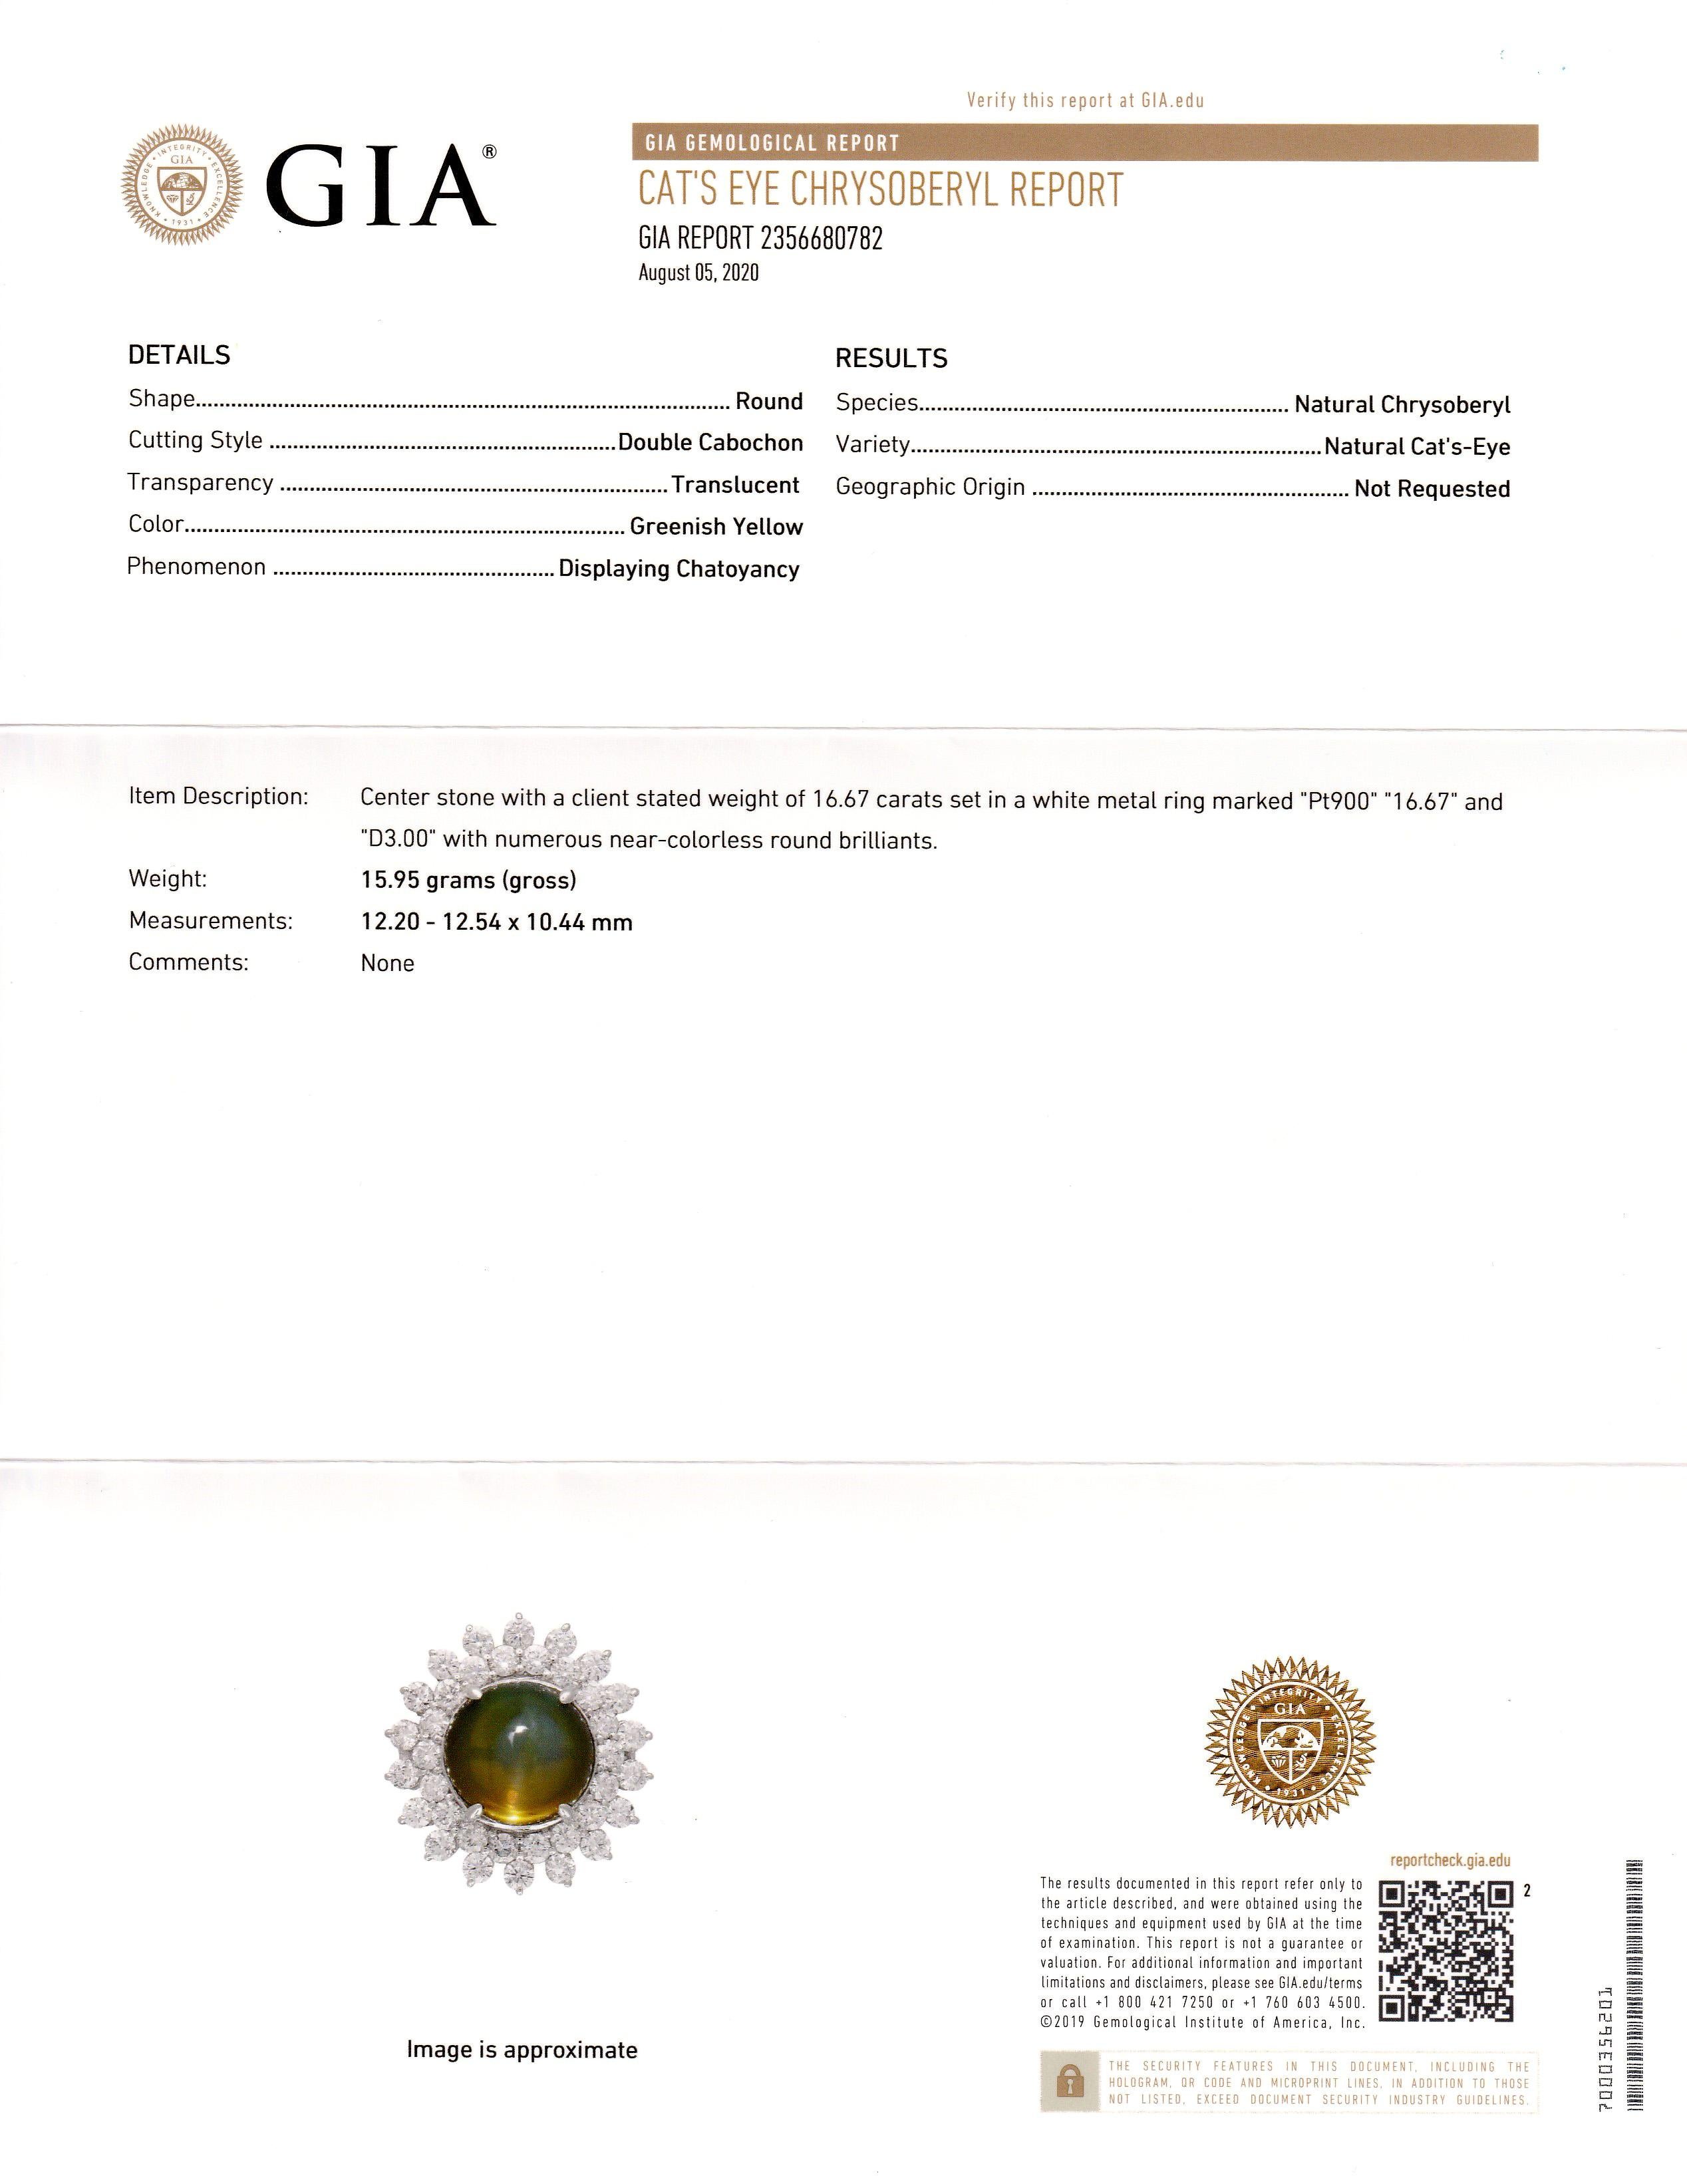 Round Cut GIA Certified 16.67 Carat Chrysoberyl Cats Eye and Diamond Wedding Ring